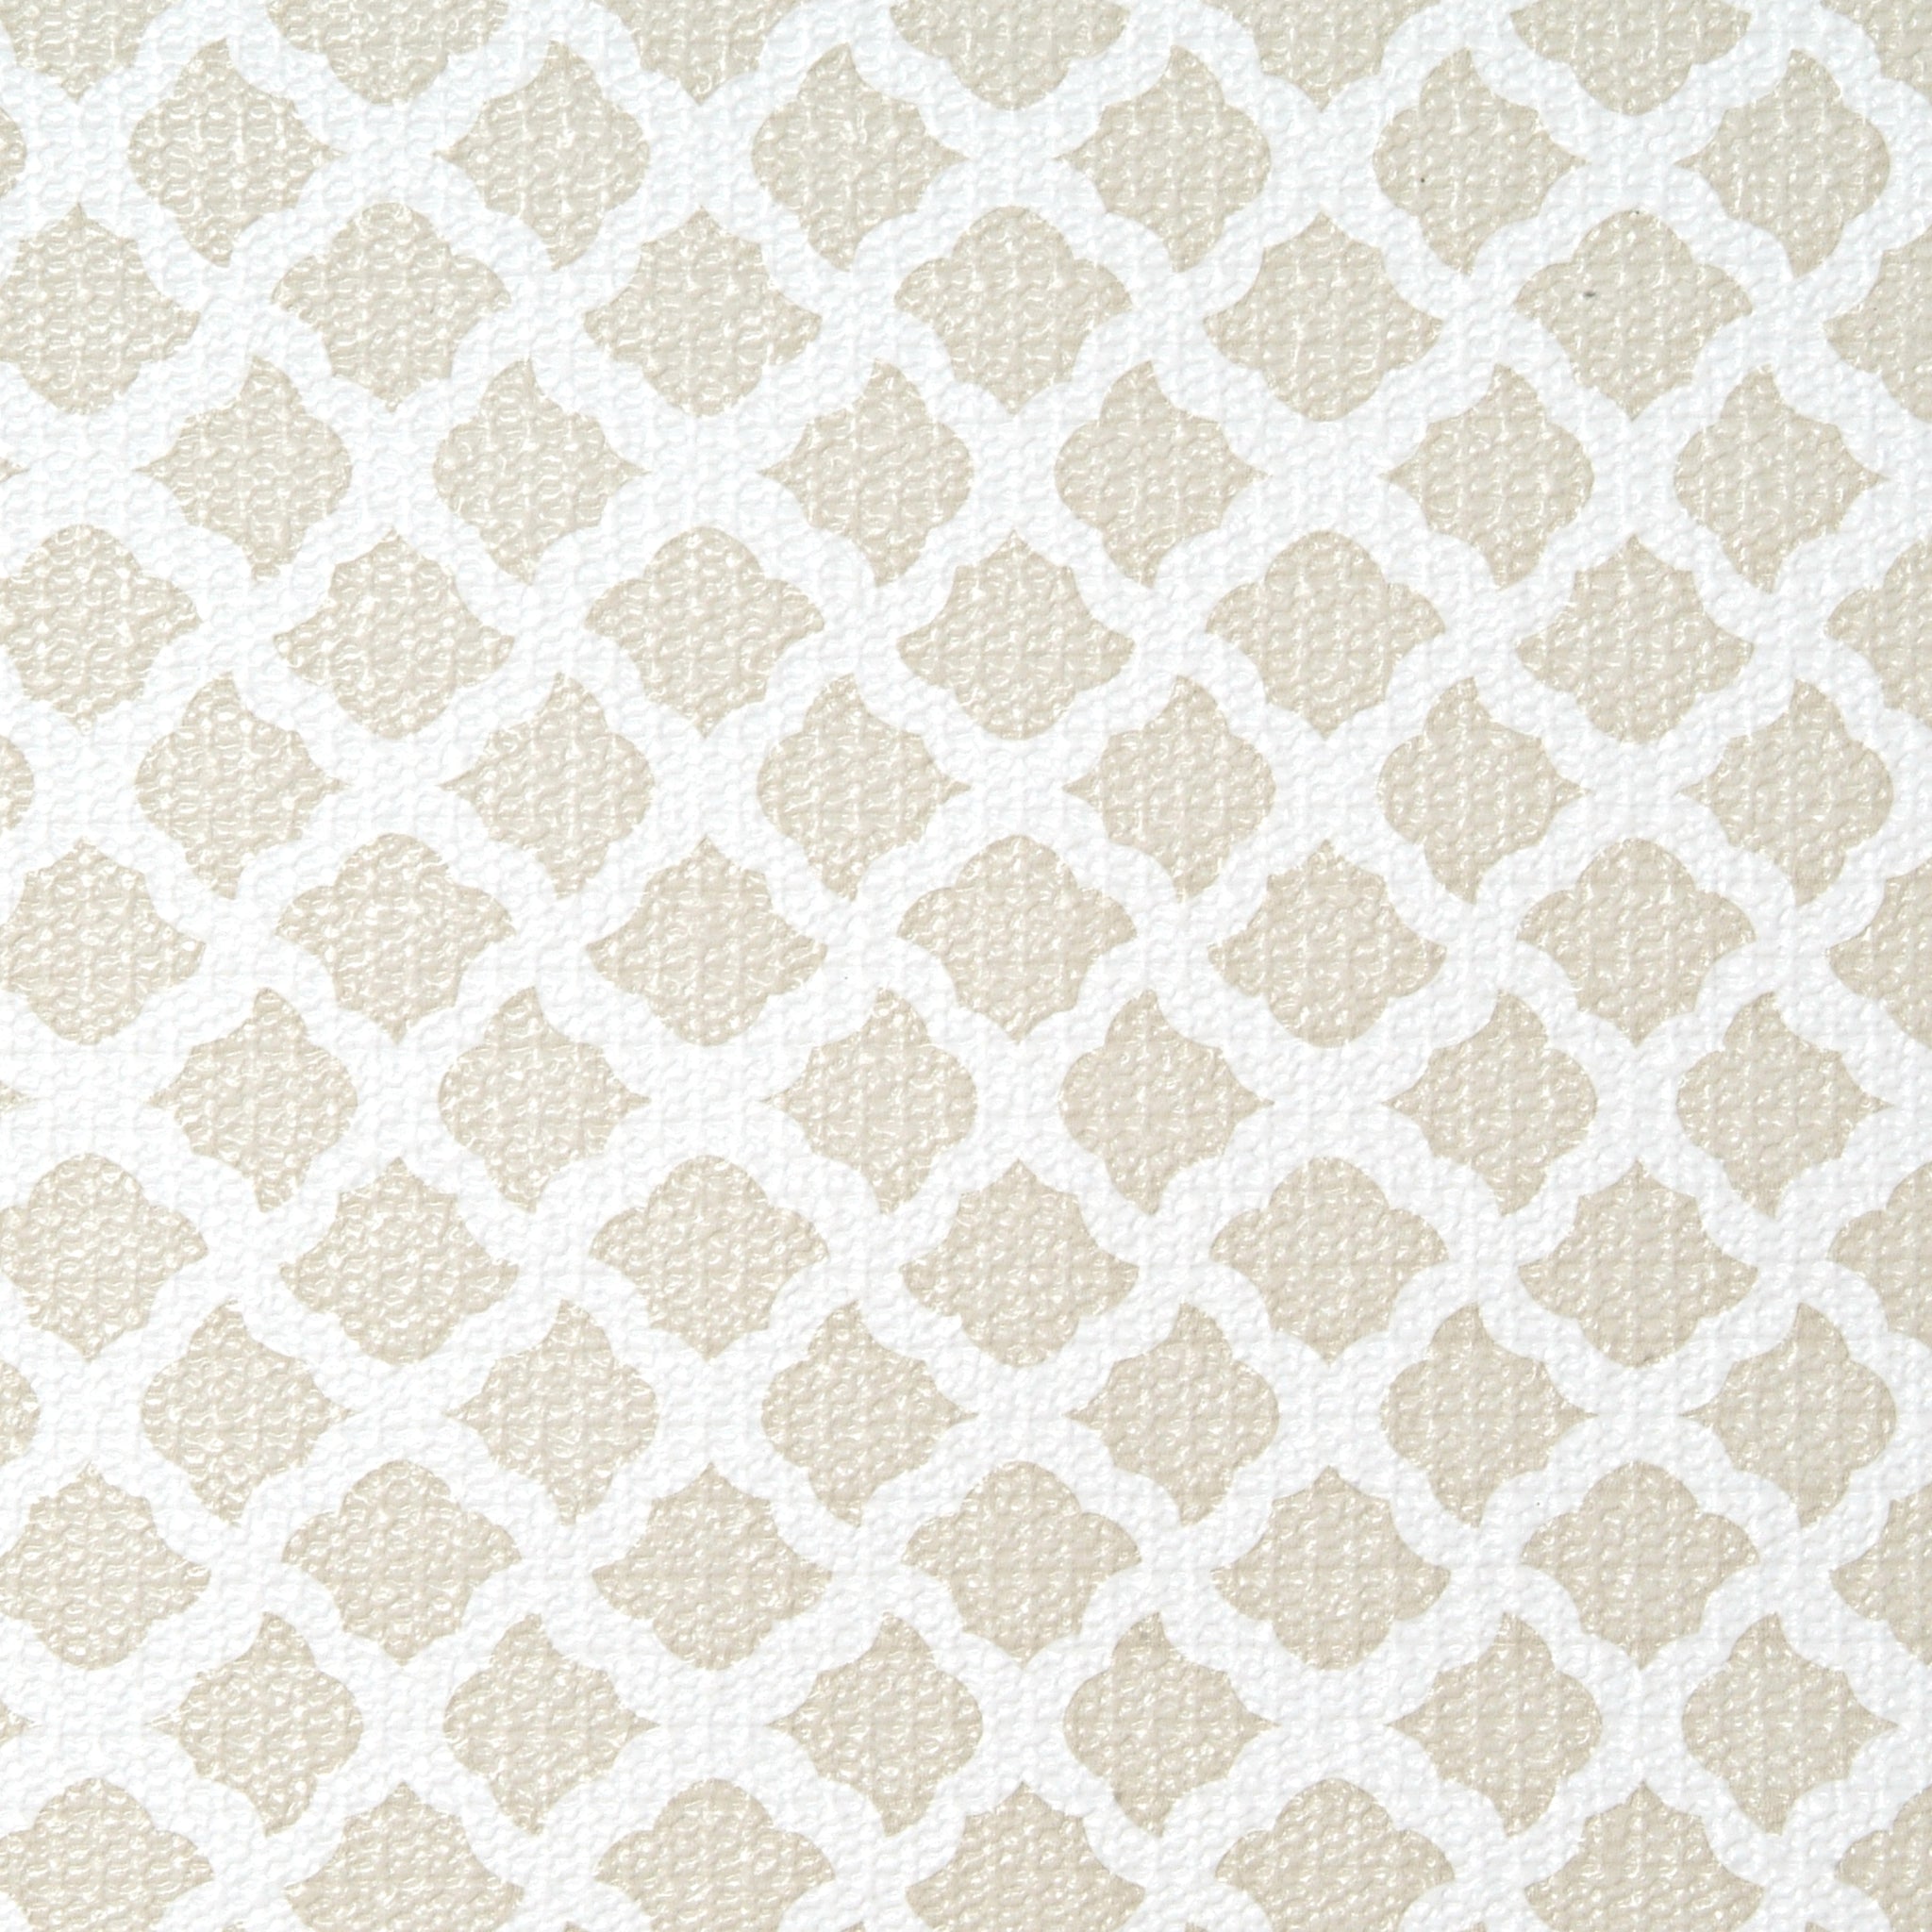 Con-Tact Brand Grip Prints Non-Adhesive Non-Slip Counter Top, Drawer/Shelf Liner, 12 x 20', Talisman Glacier Gray